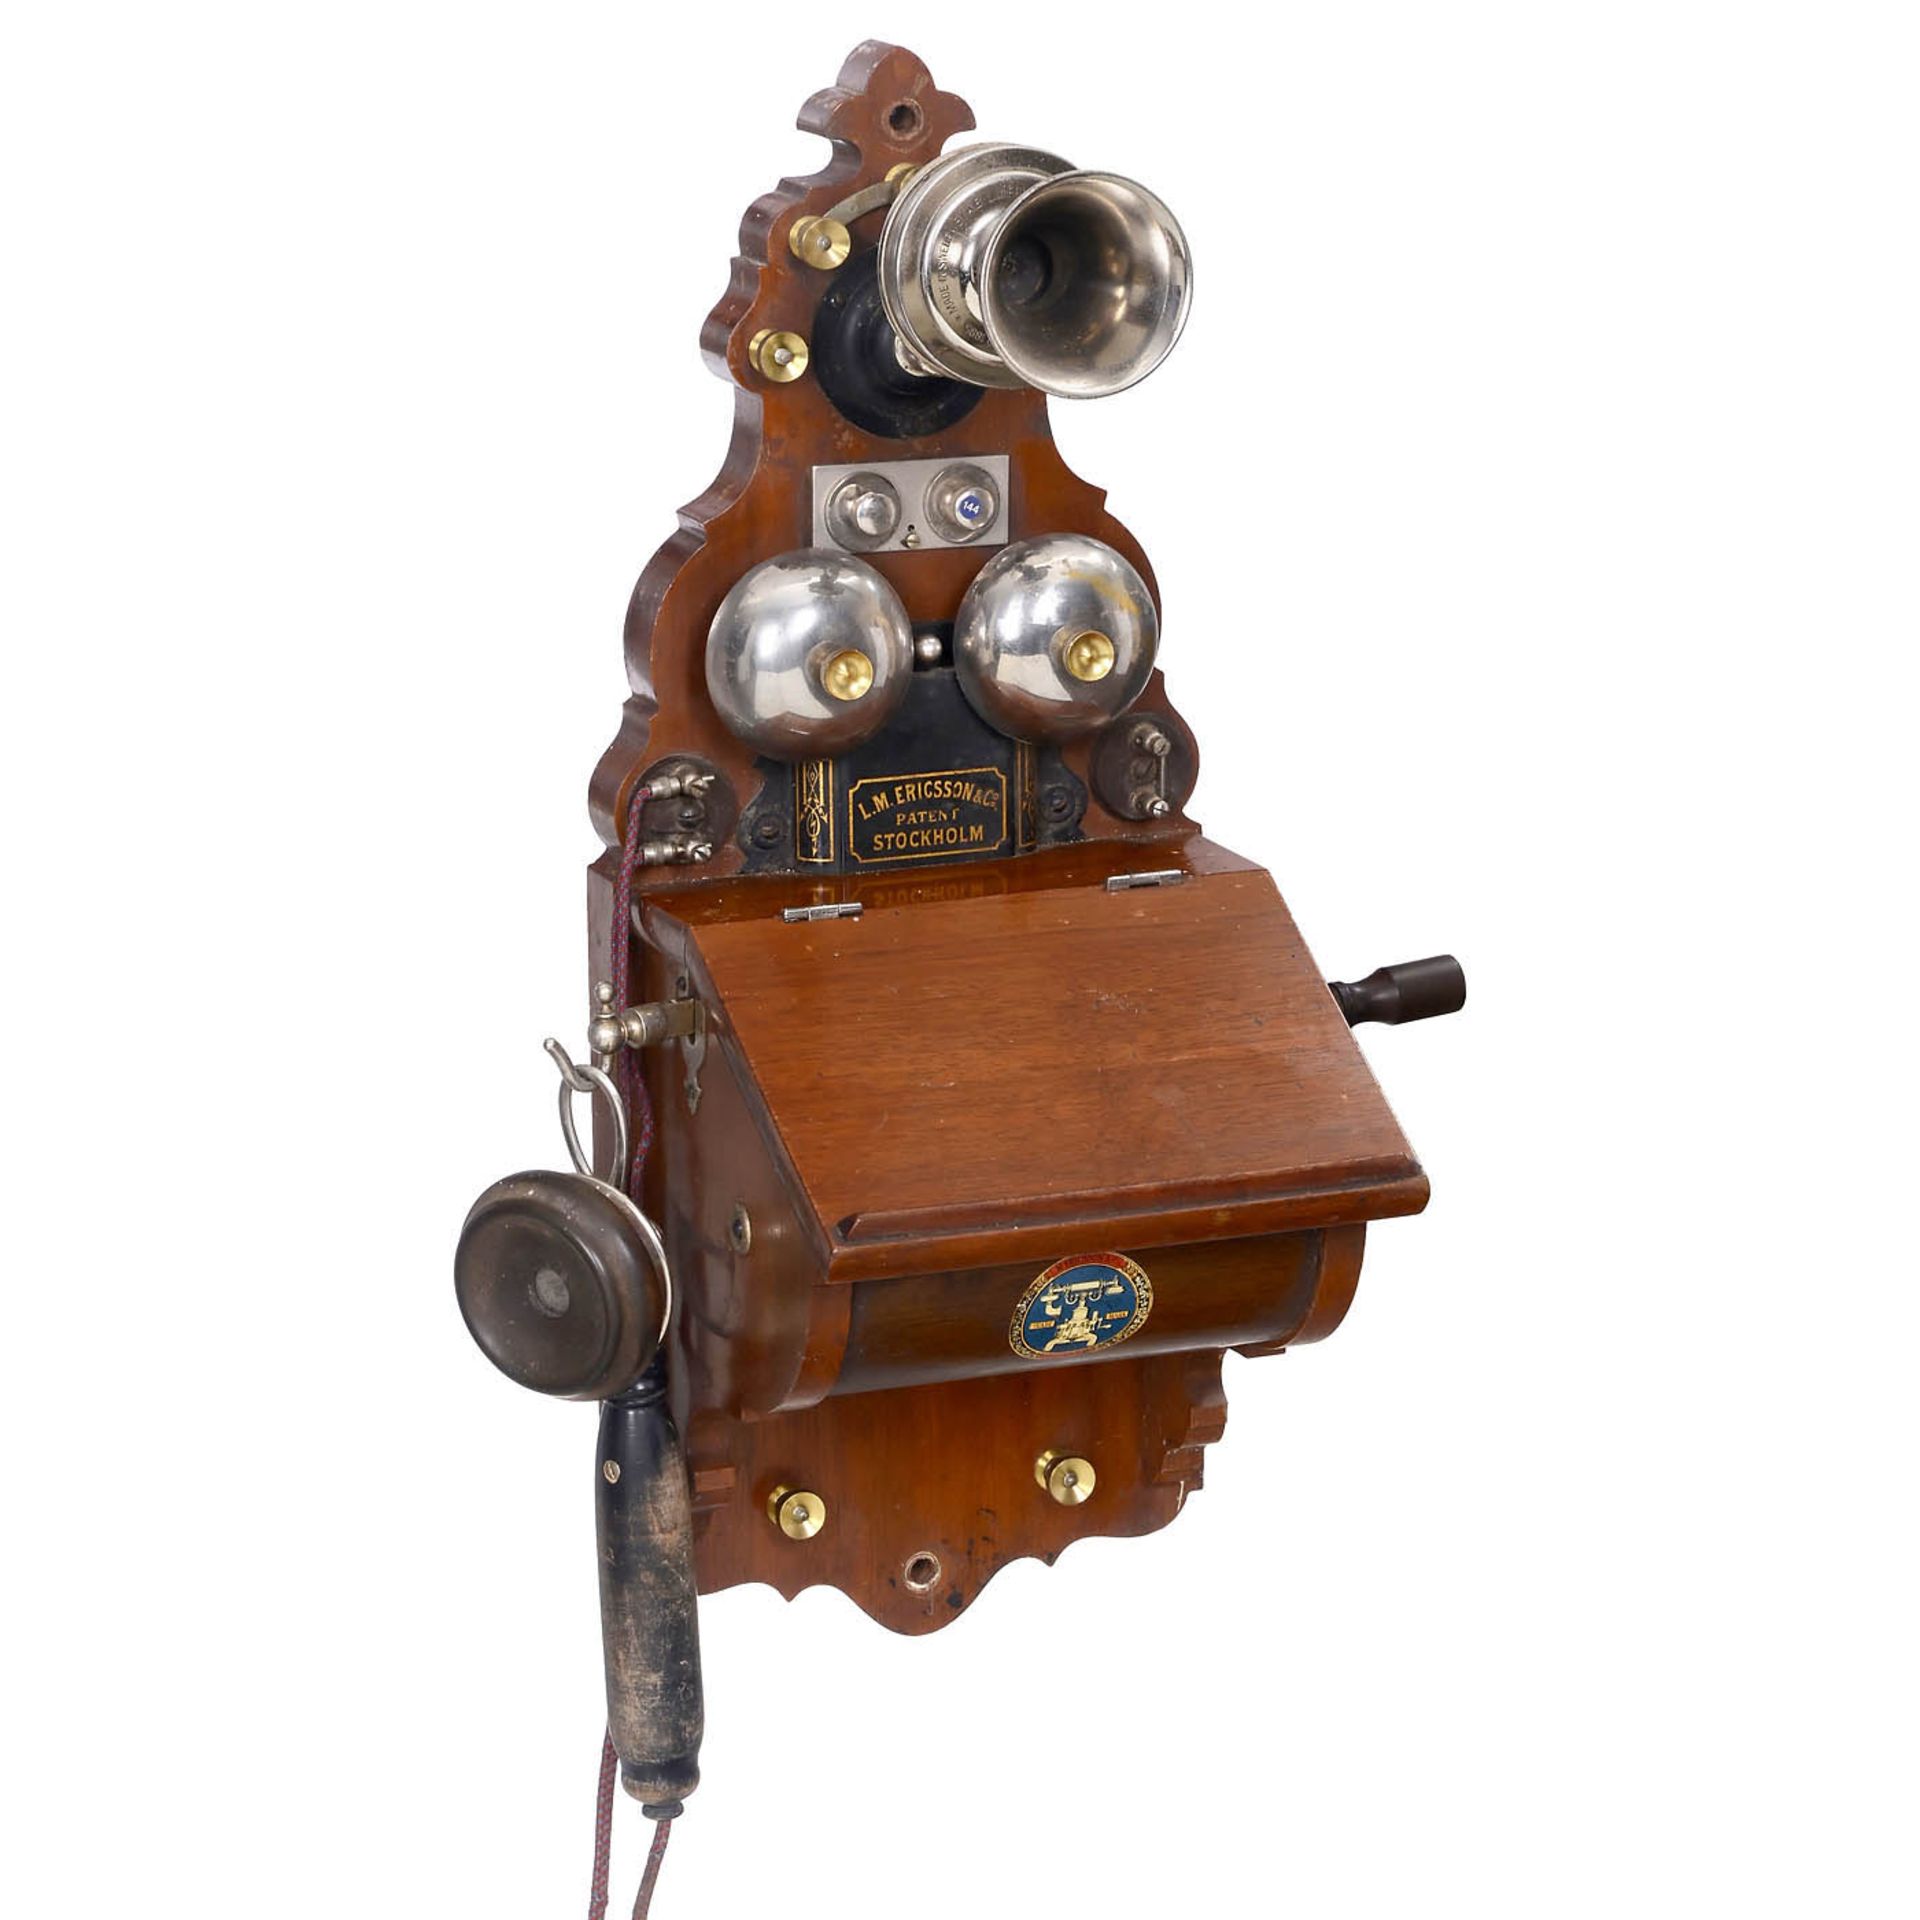 Ericsson Model 305 Wall Telephone, c. 1895